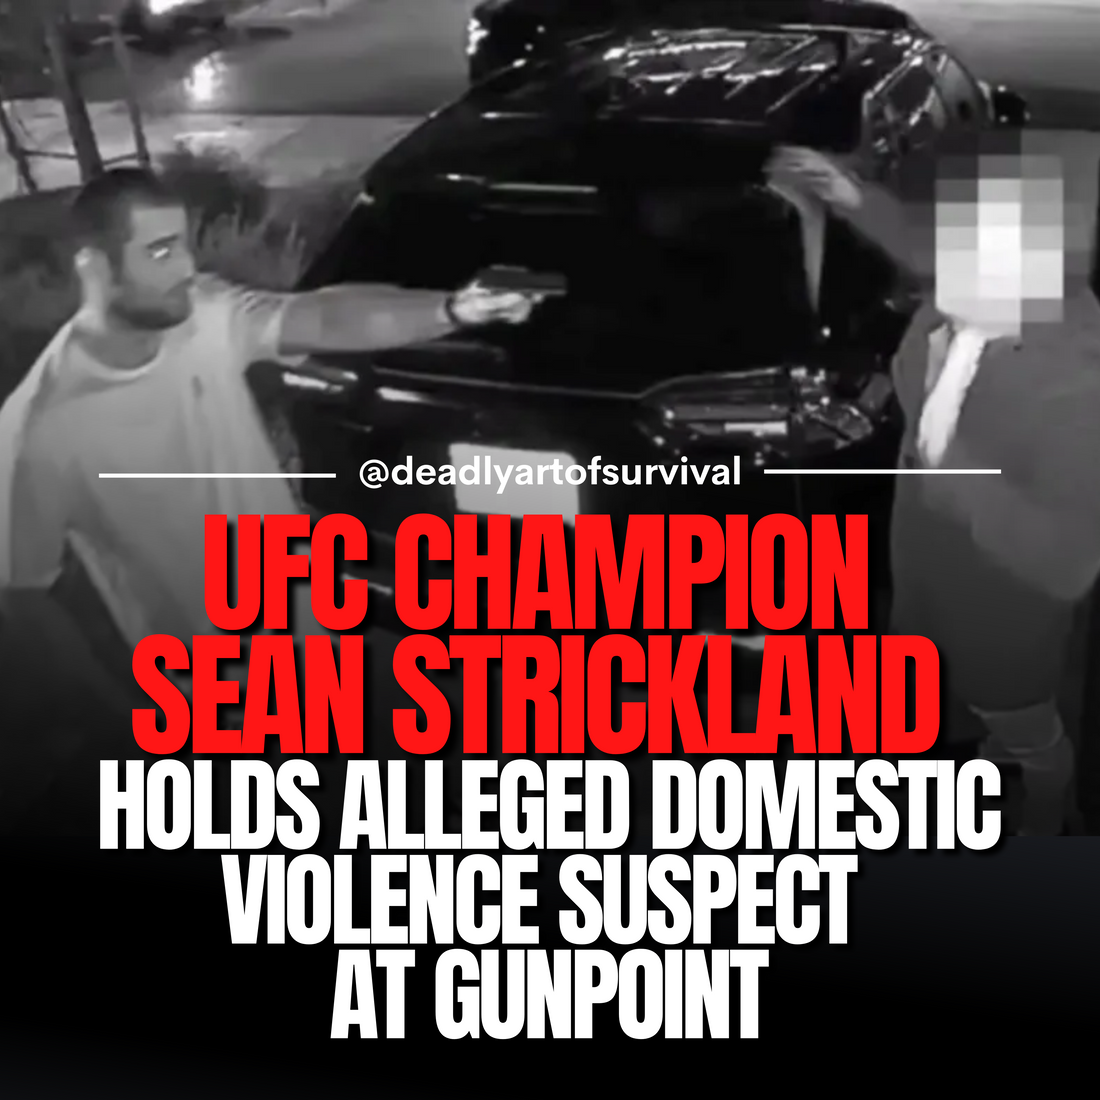 UFC Champ Sean Strickland Intervenes, Holds Alleged Domestic Violence Suspect at Gunpoint